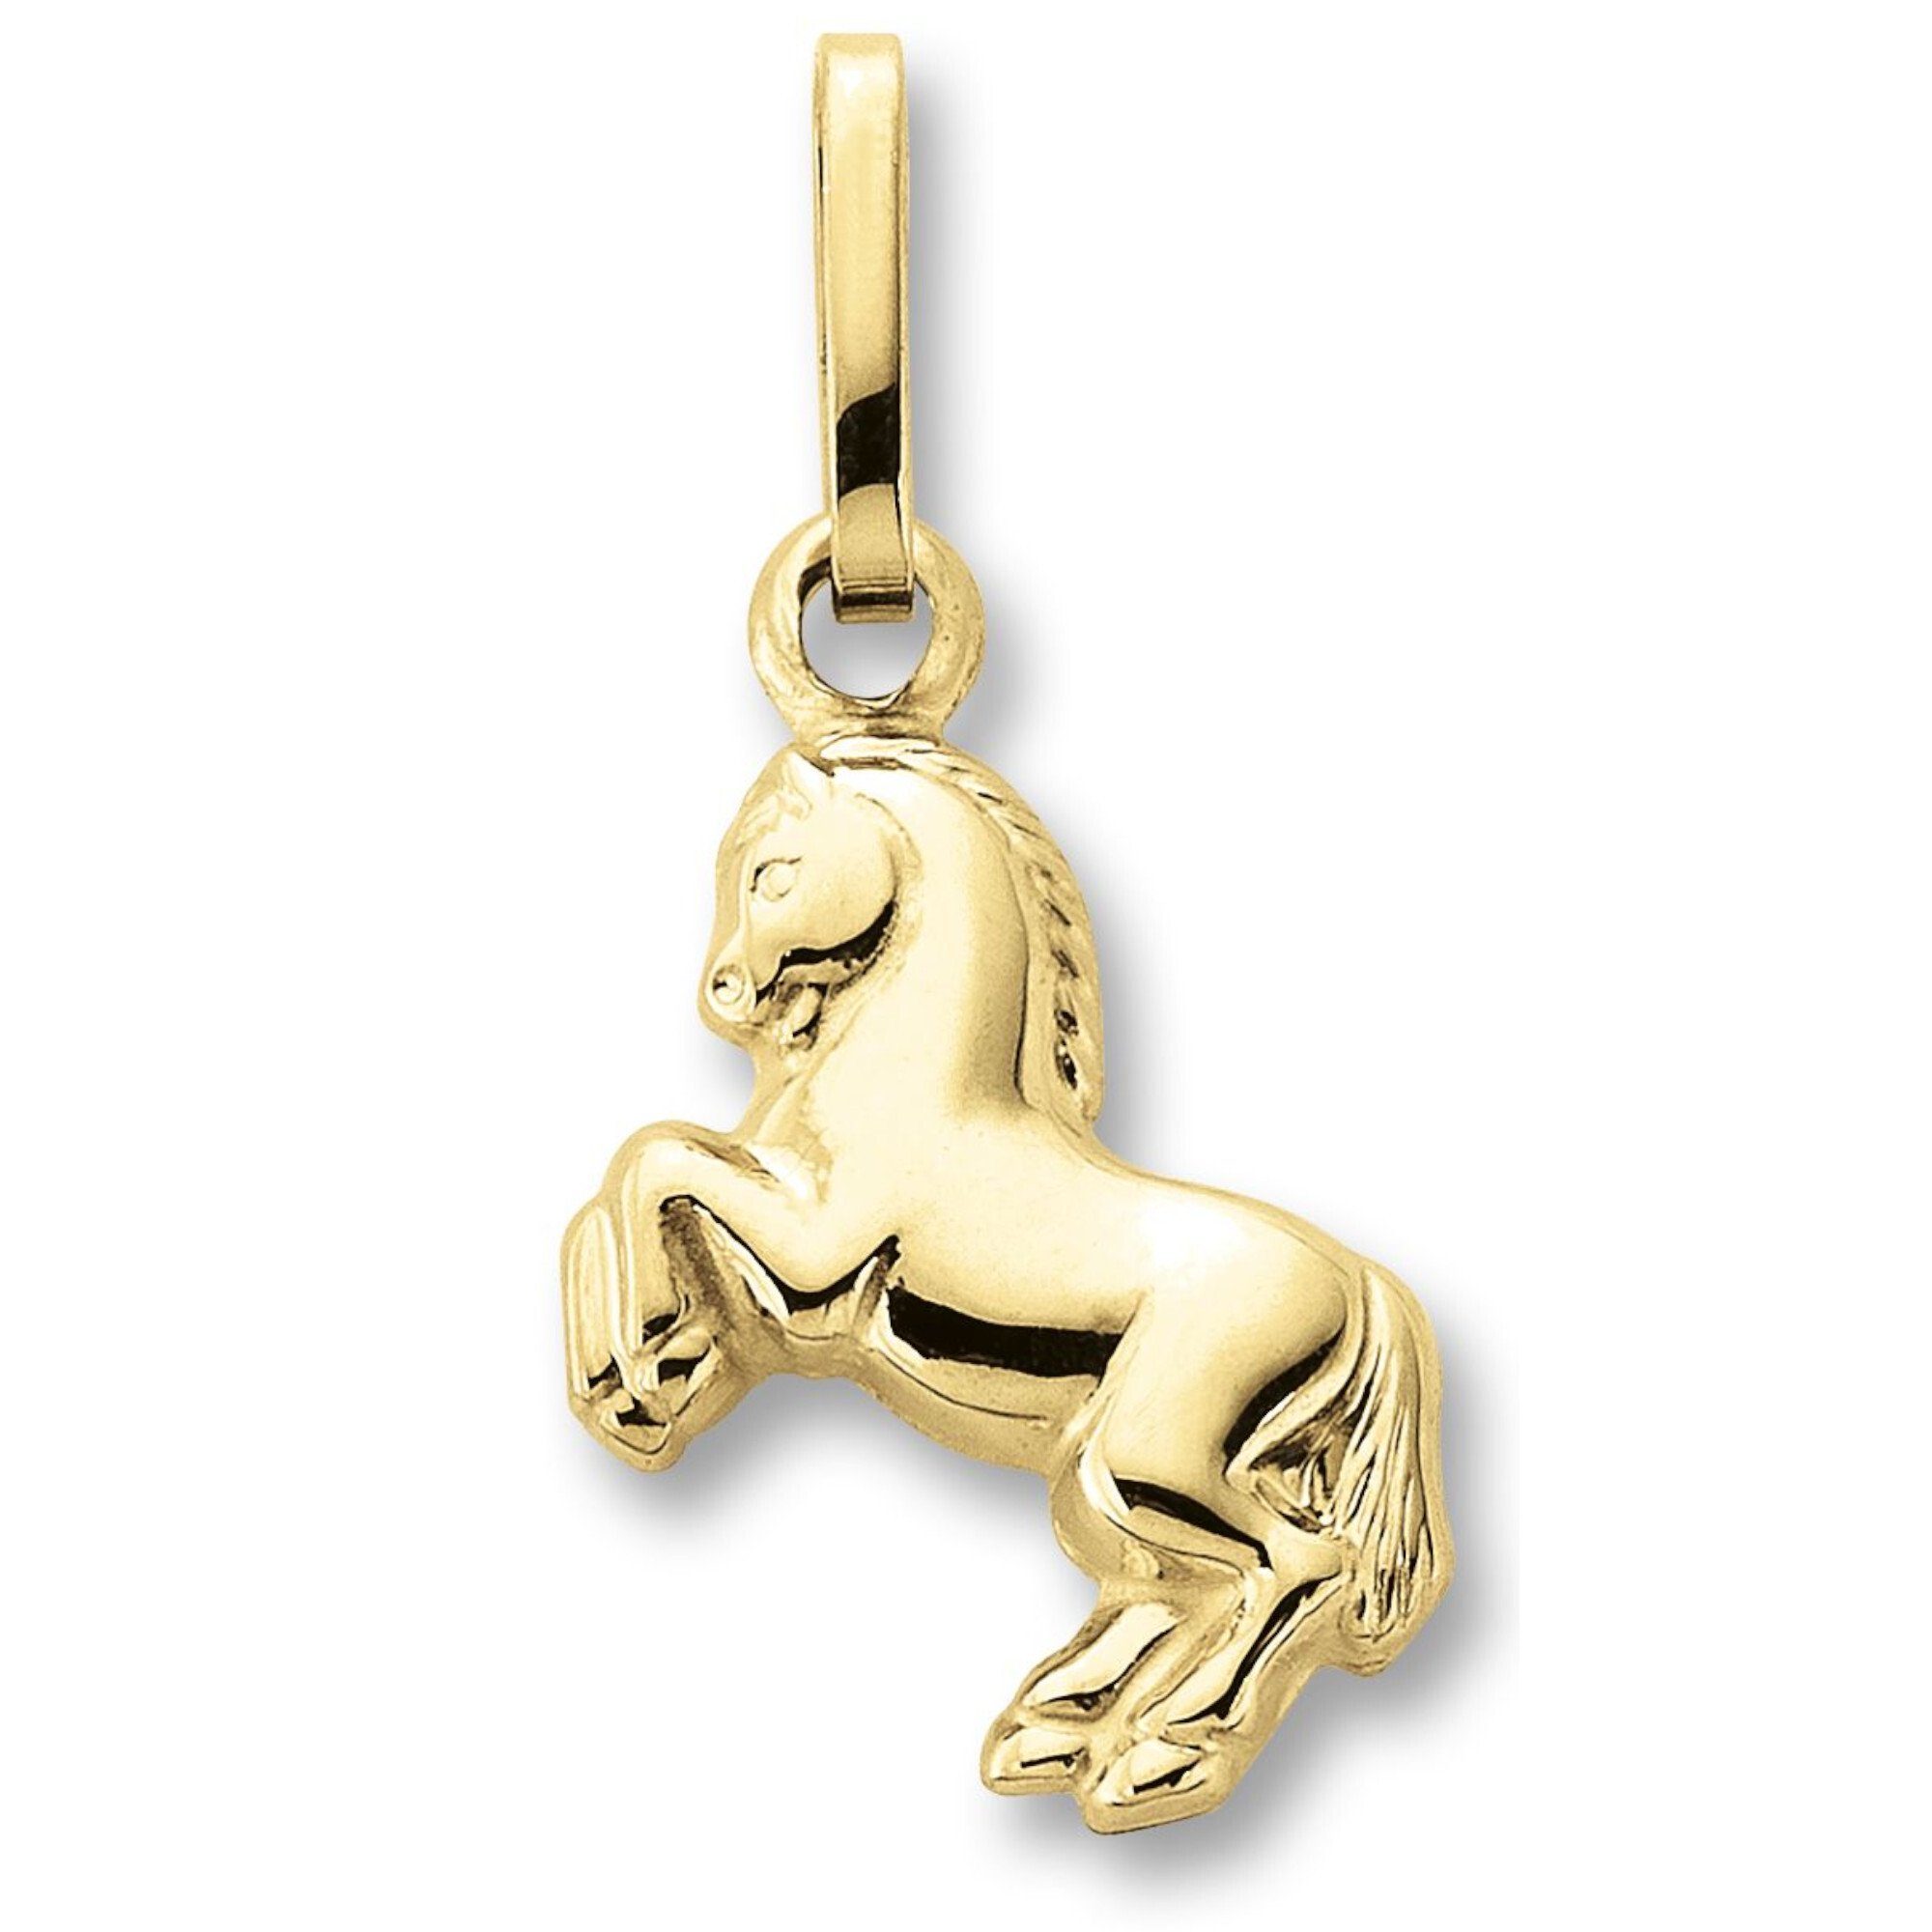 ONE ELEMENT Kettenanhänger Pferd Anhänger aus 333 Gelbgold, Damen Gold  Schmuck Pferd, Verschluss : verlötete Öse (beweglich) | Kettenanhänger